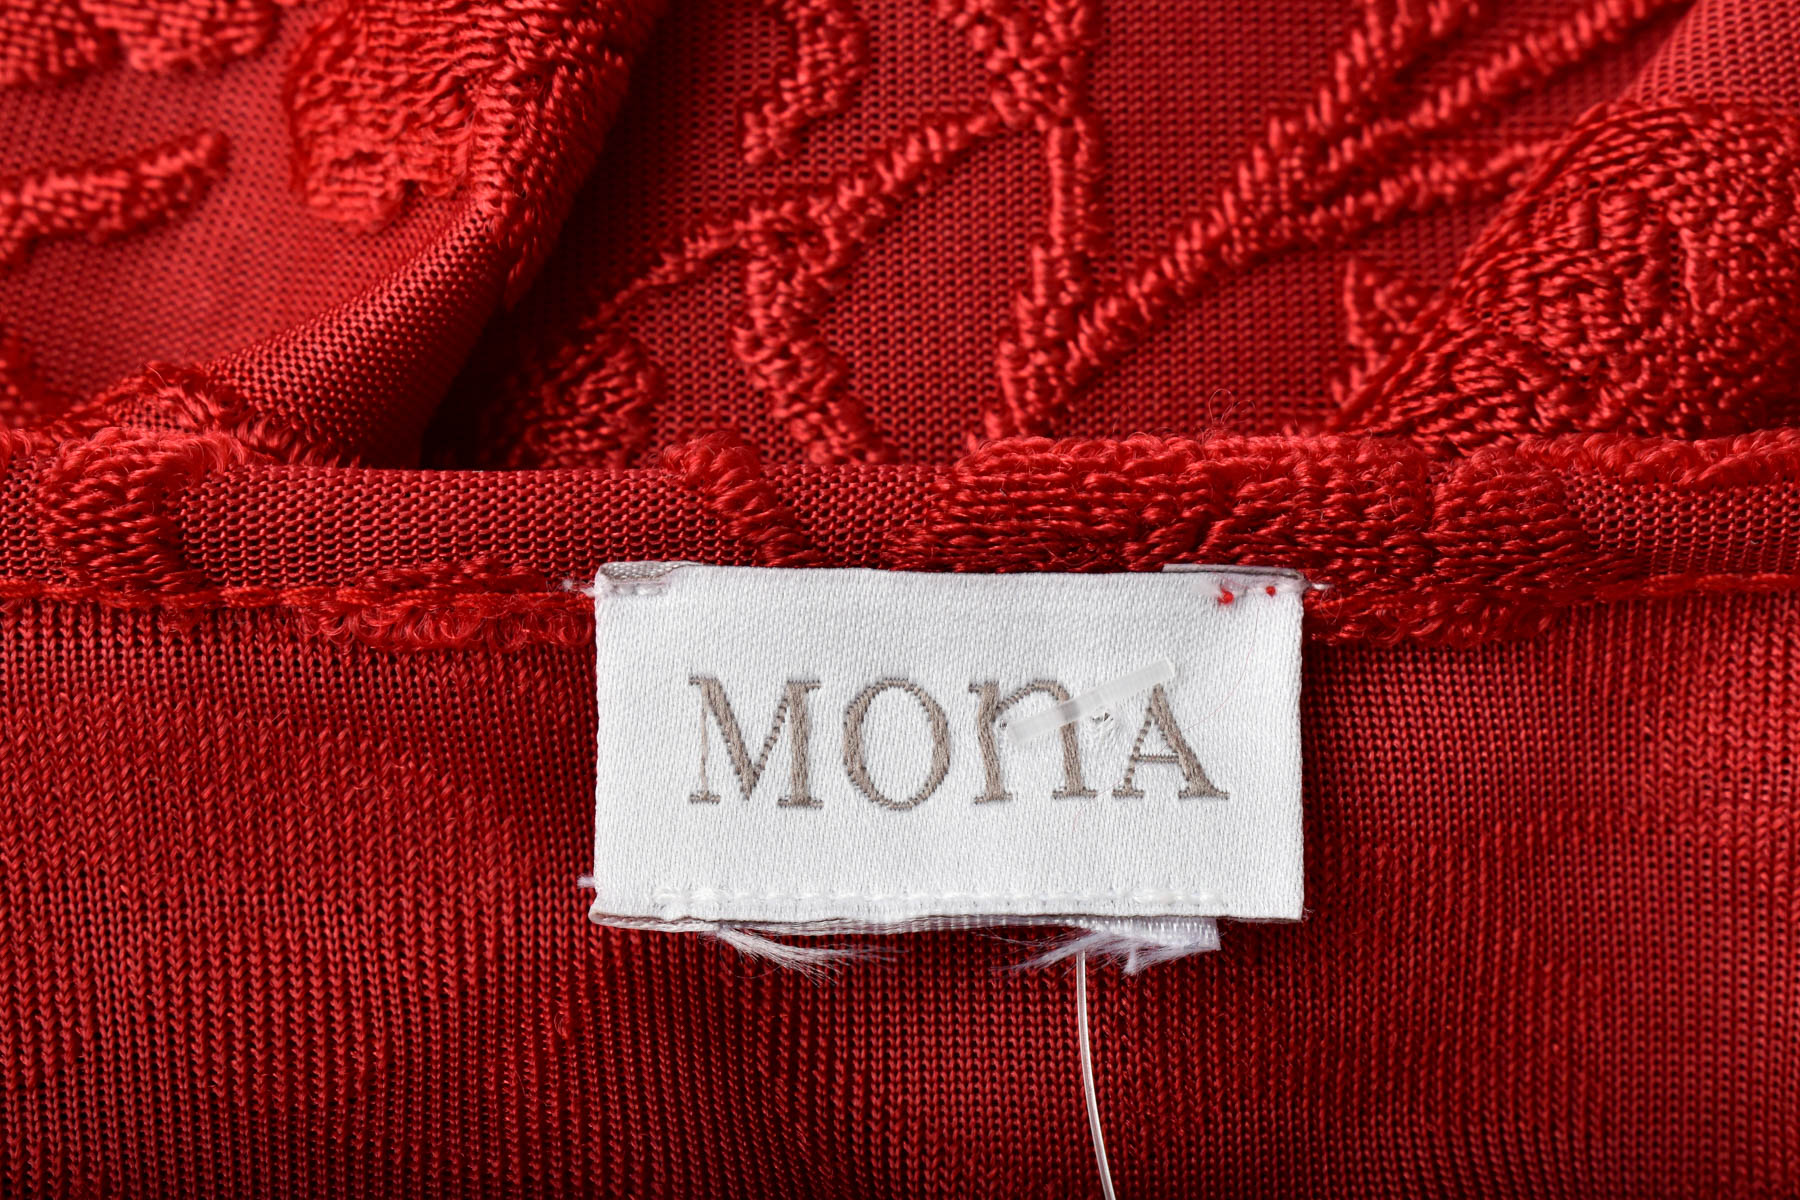 Women's shirt - Mona - 2